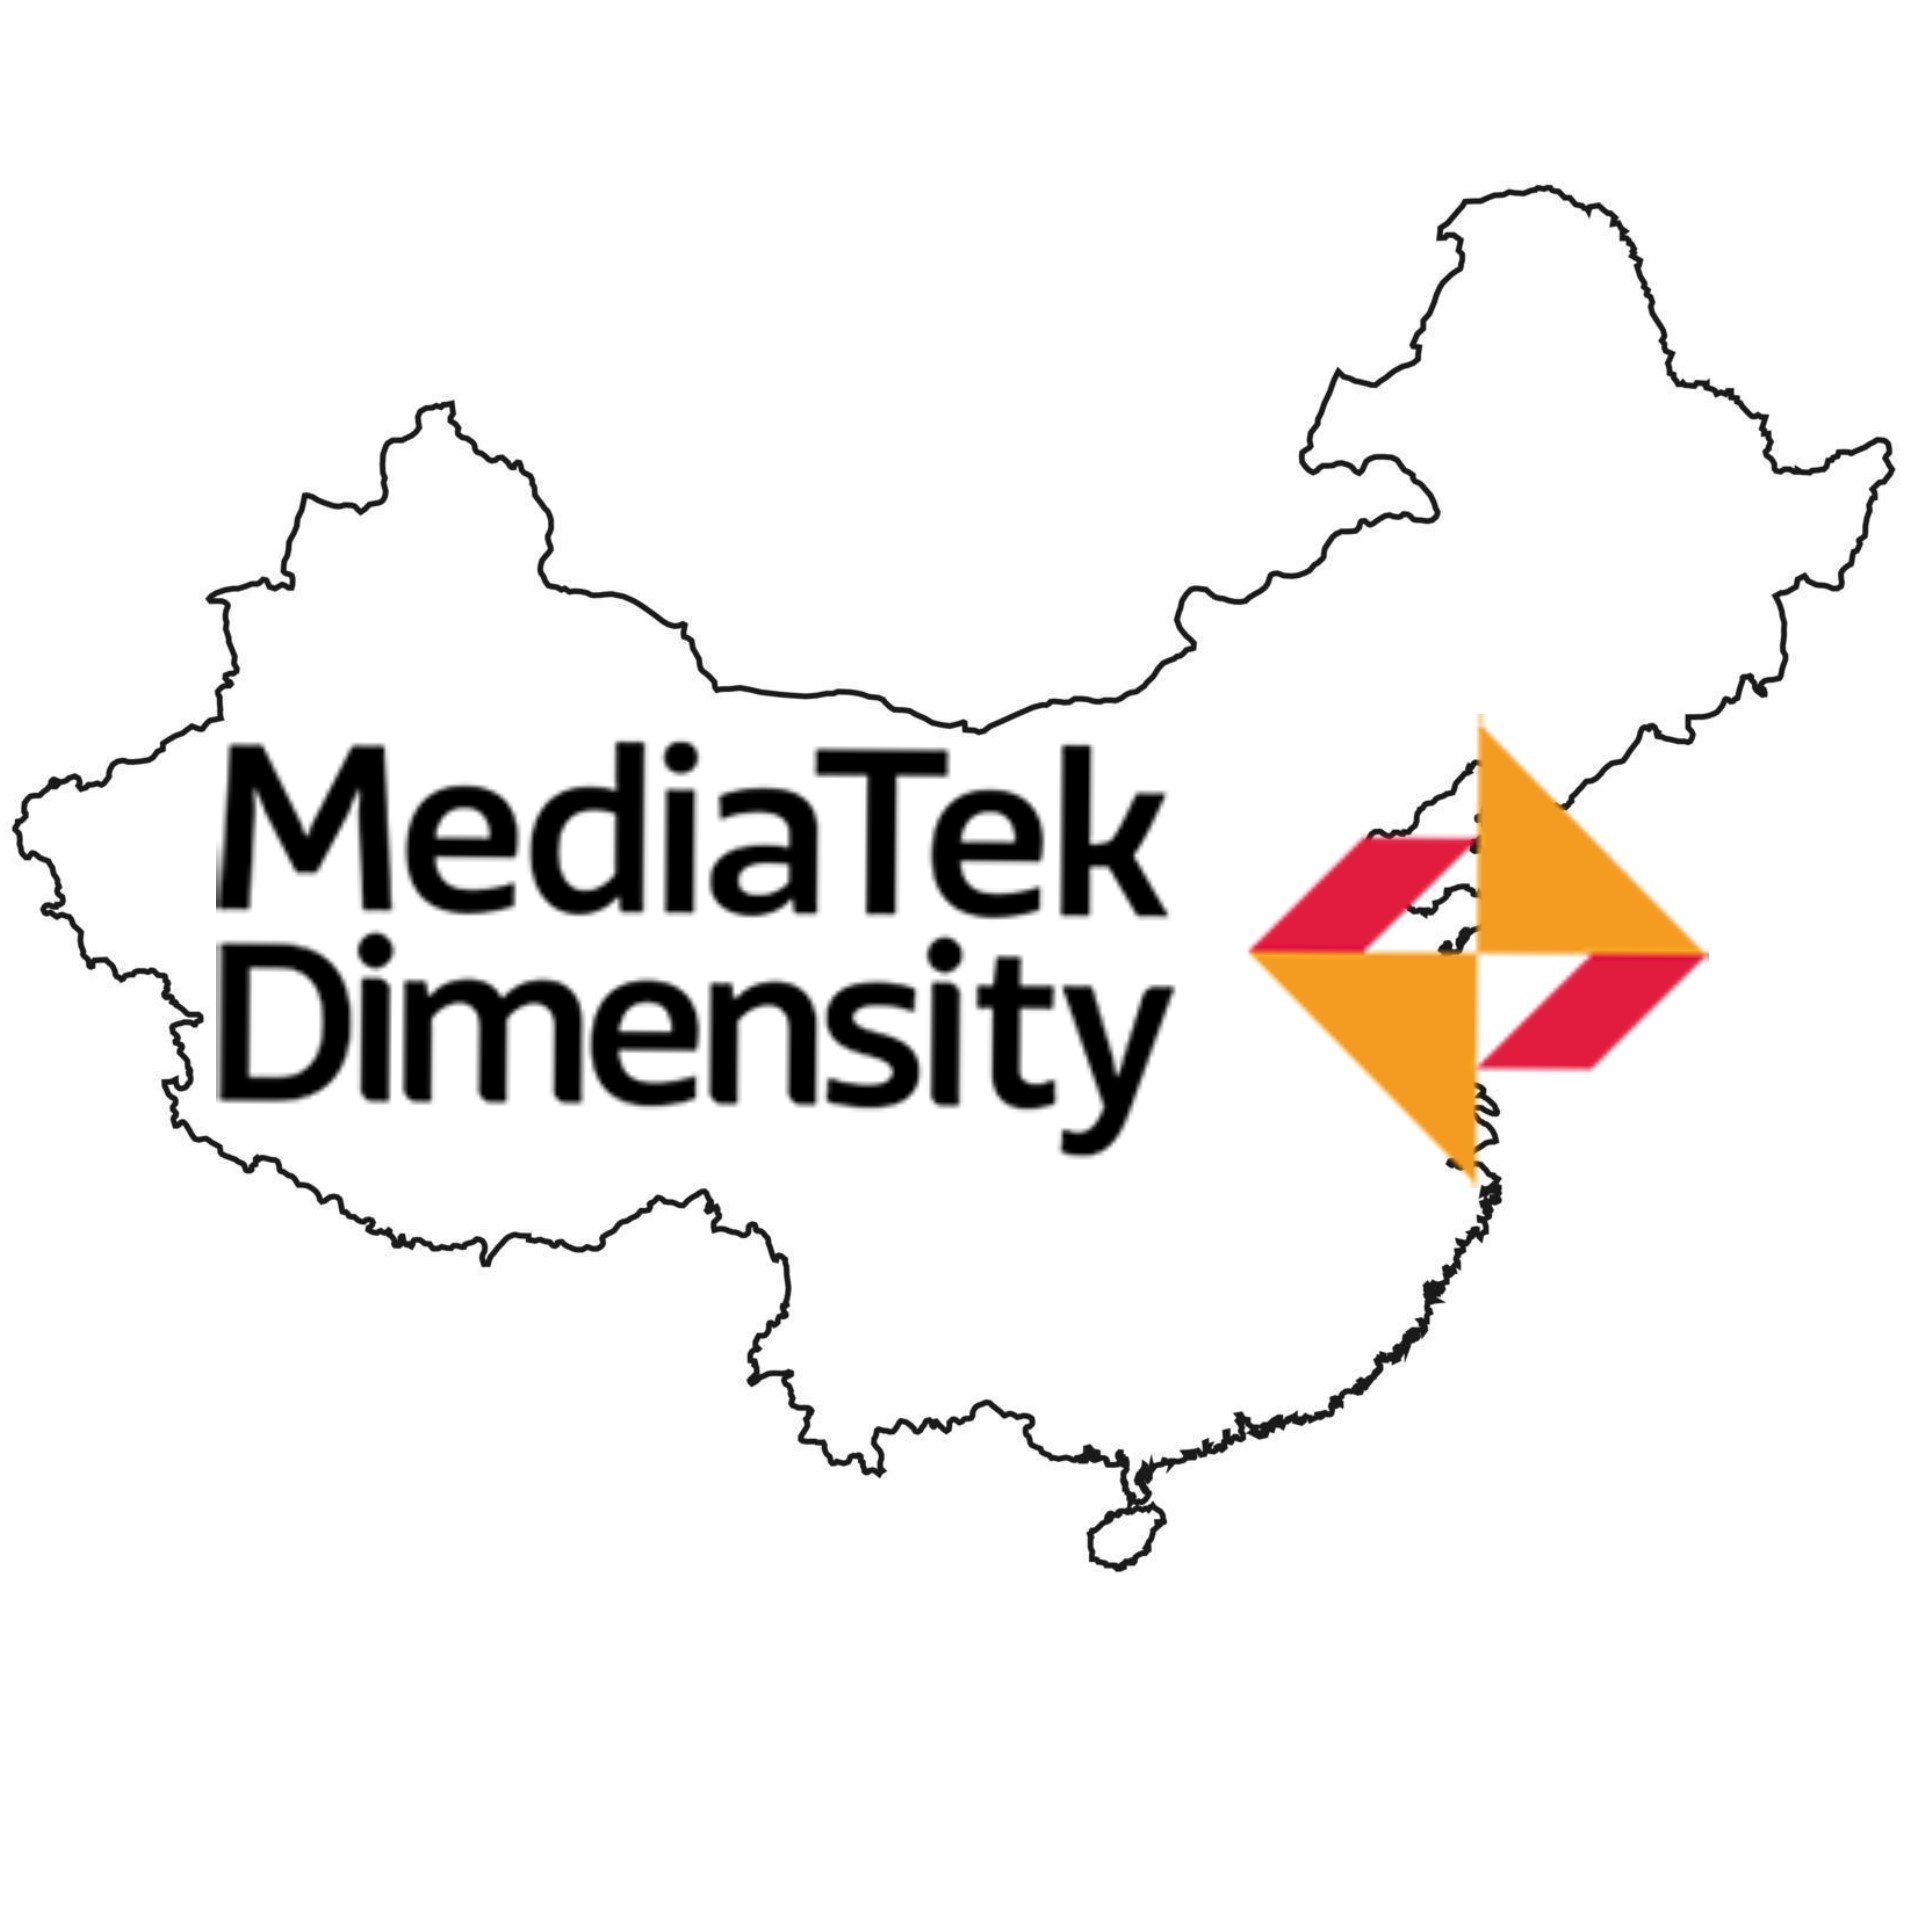 Cuota de mercado chino de Mediatek